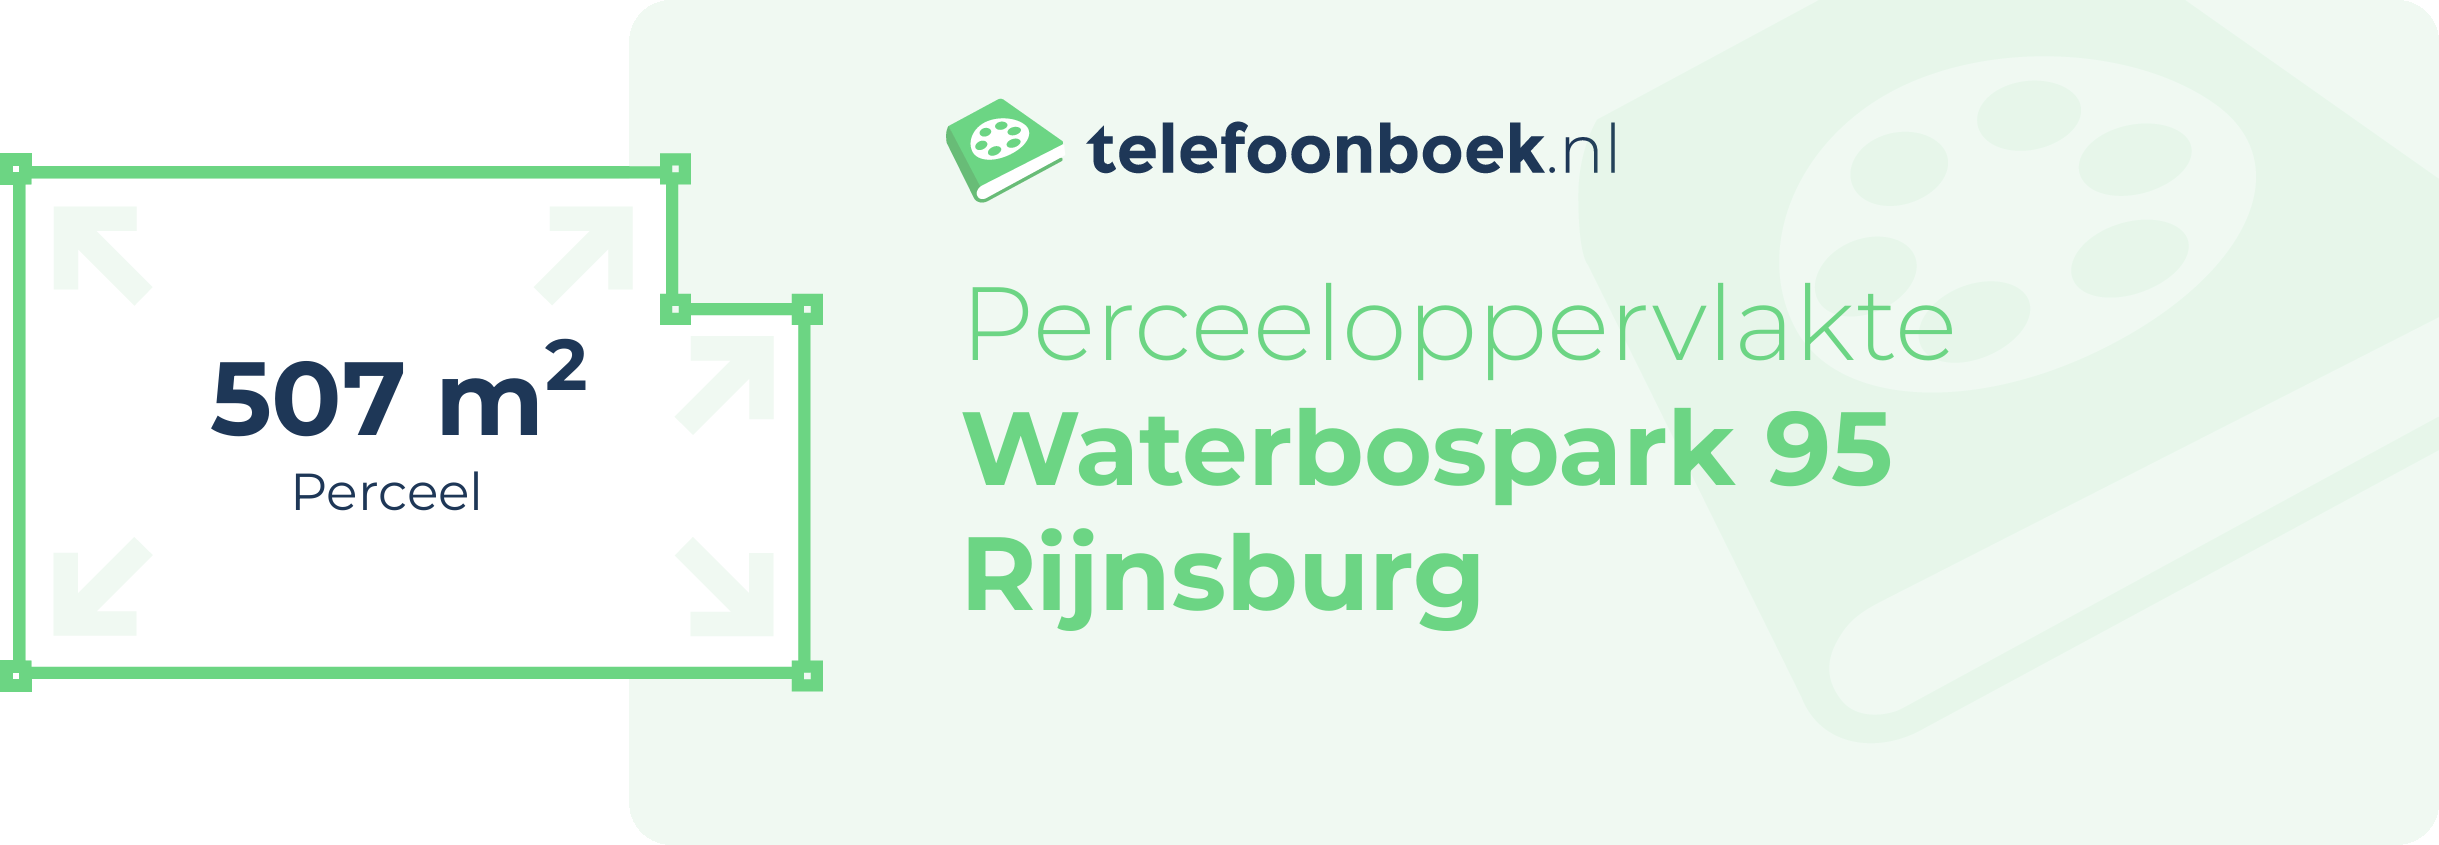 Perceeloppervlakte Waterbospark 95 Rijnsburg